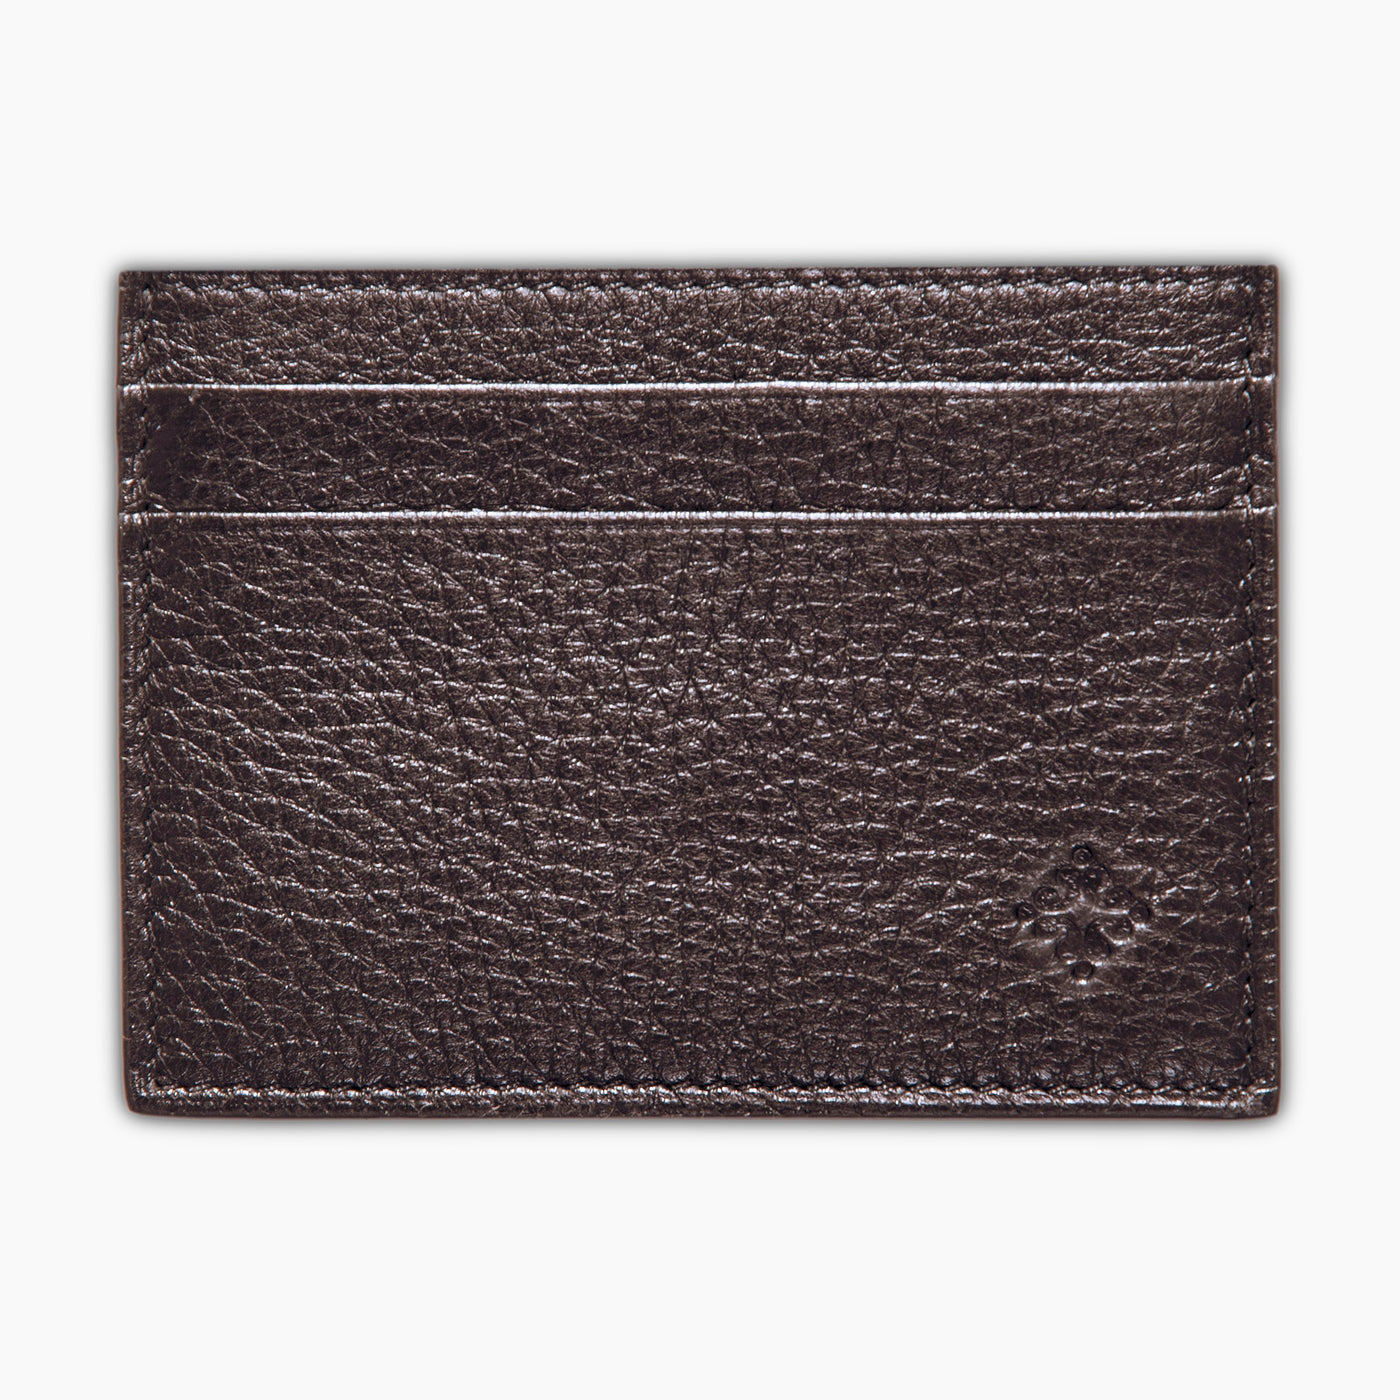 Cesar 100% deerskin leather credit card holder (dark brown)